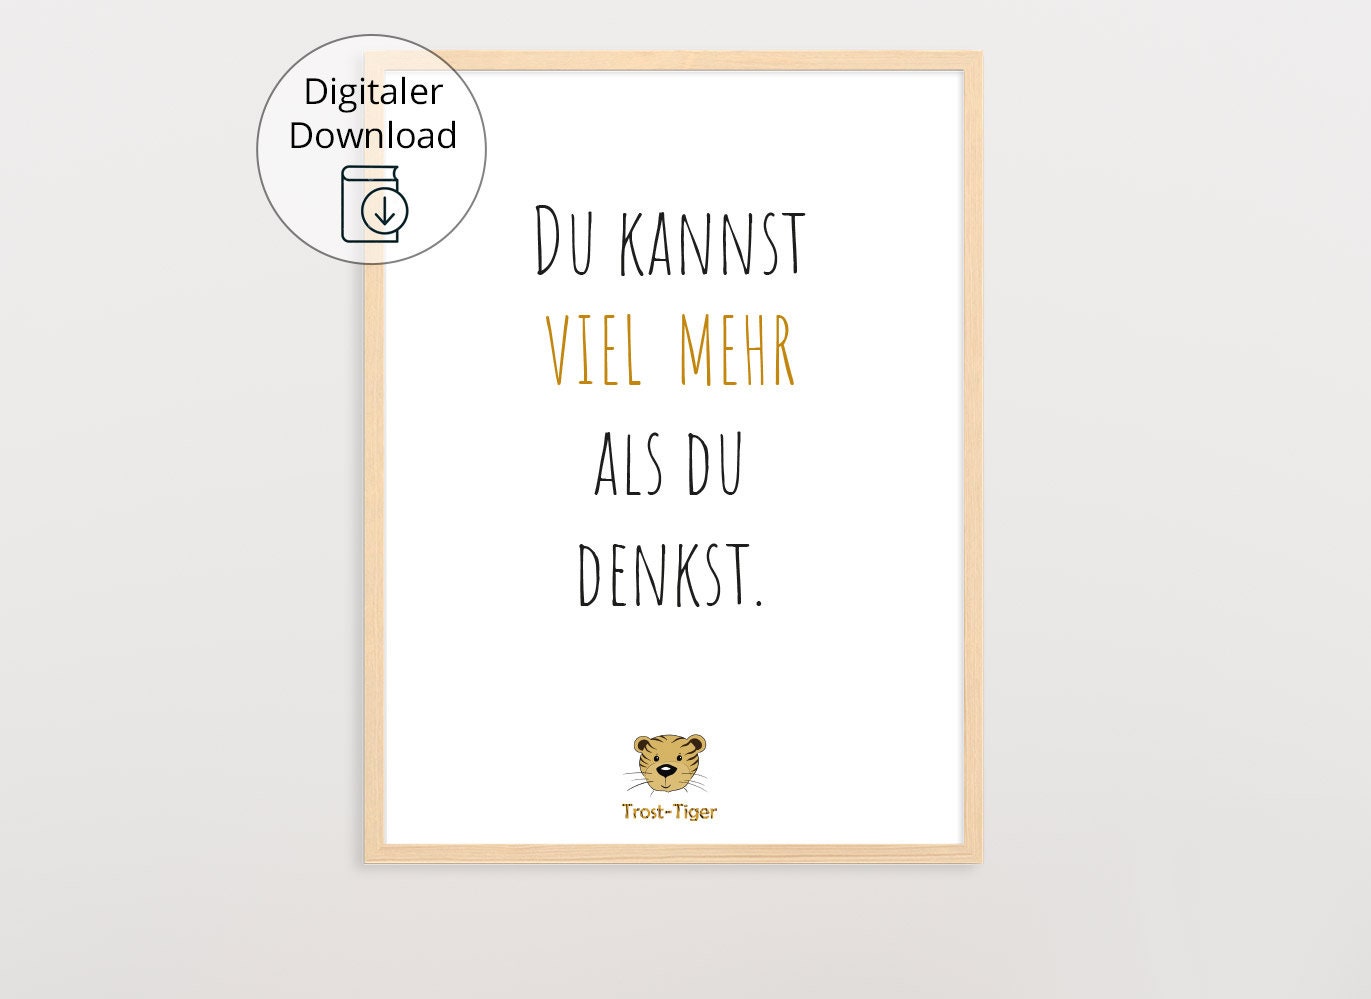 Digitaler Download Poster Trost-Tiger, Plakat Deko Kinderzimmer, Kunstdruck, Print, Sprüche Kinderbild